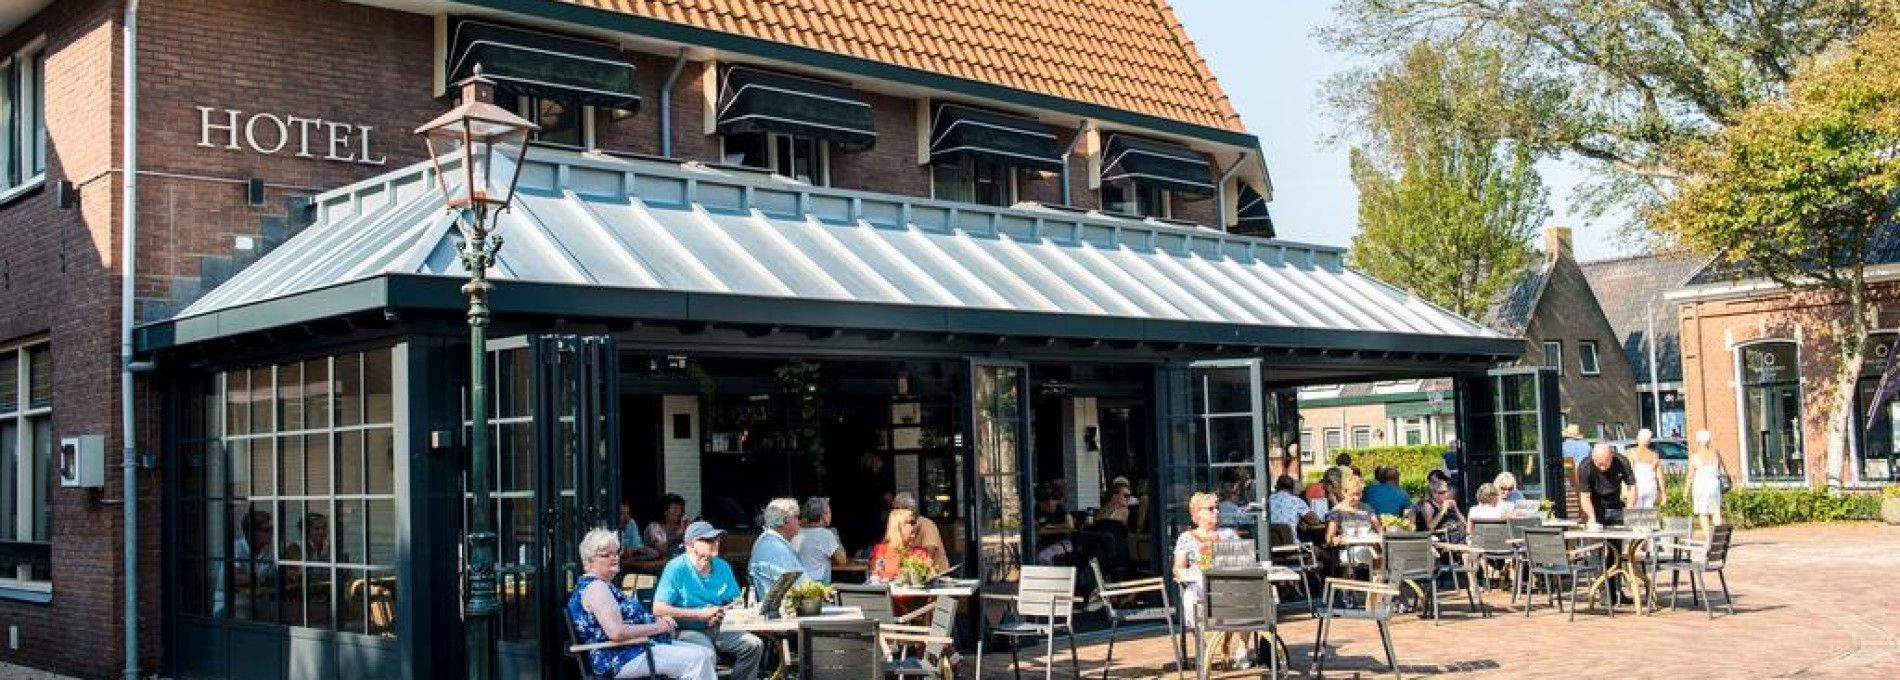 Hotel-Restaurant de Jong - Tourist Information “VVV” Ameland